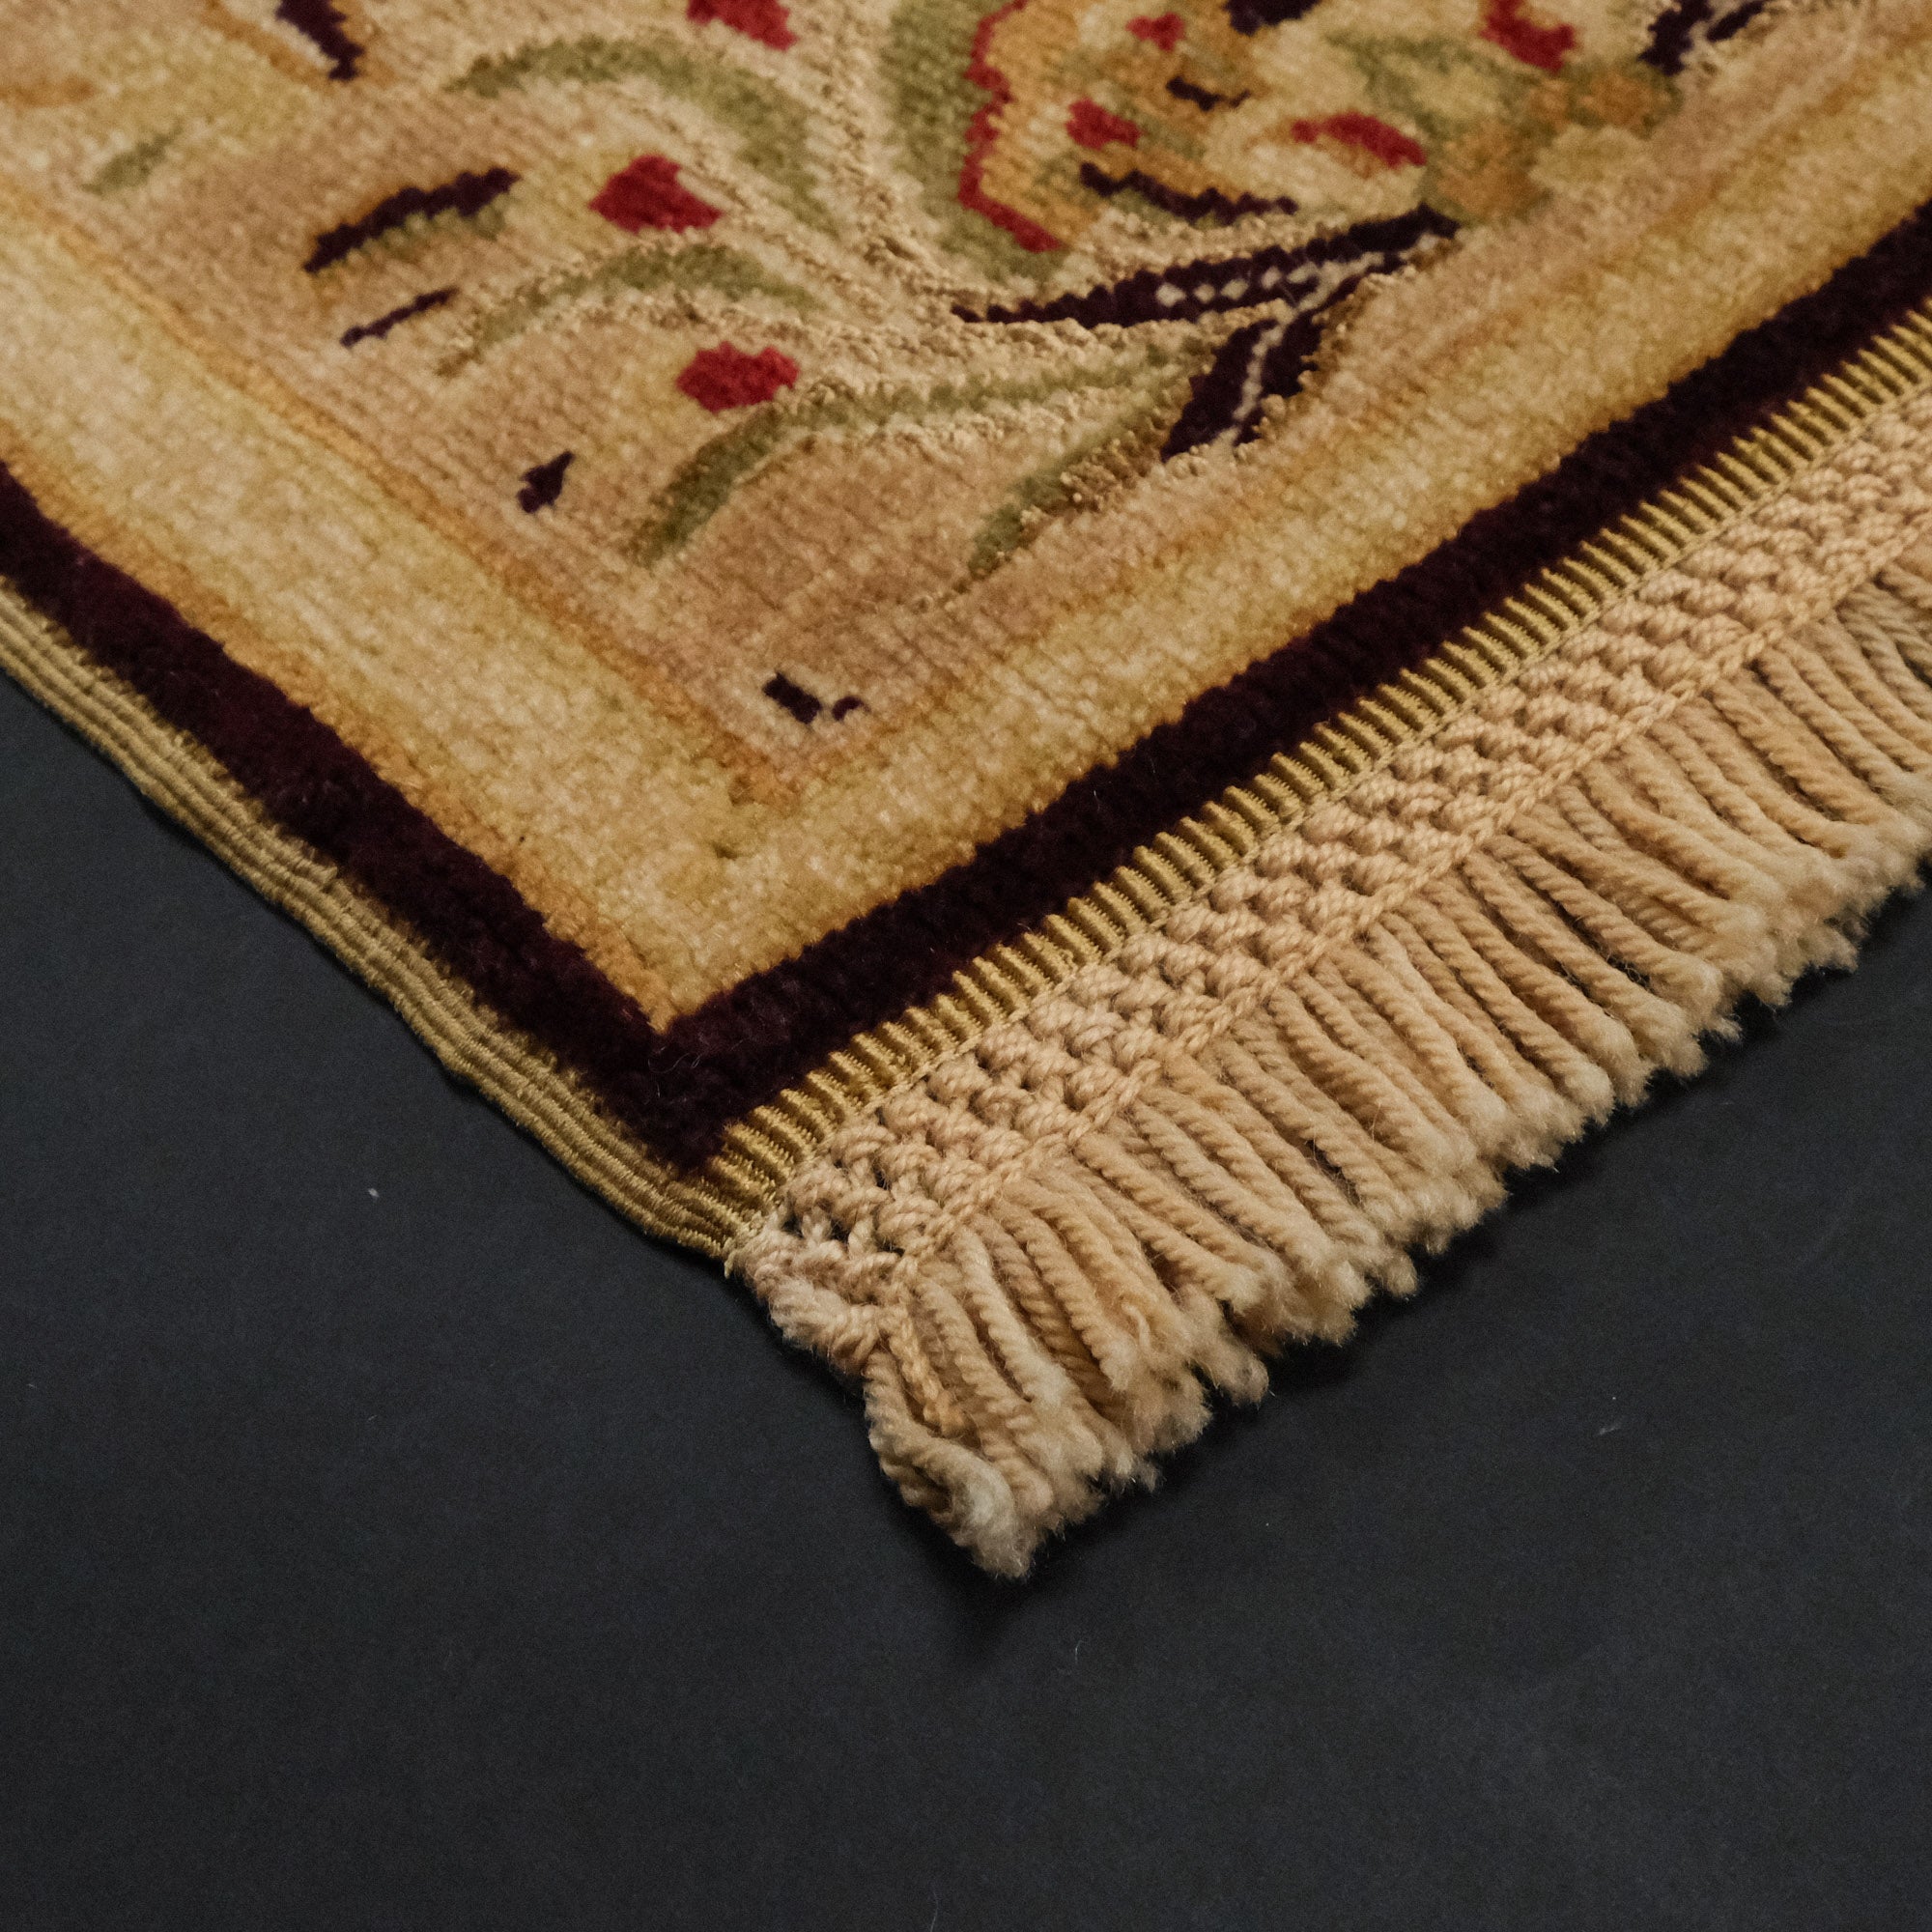 Harem Series Hand-Woven Uşak Patterned Burgundy Carpet